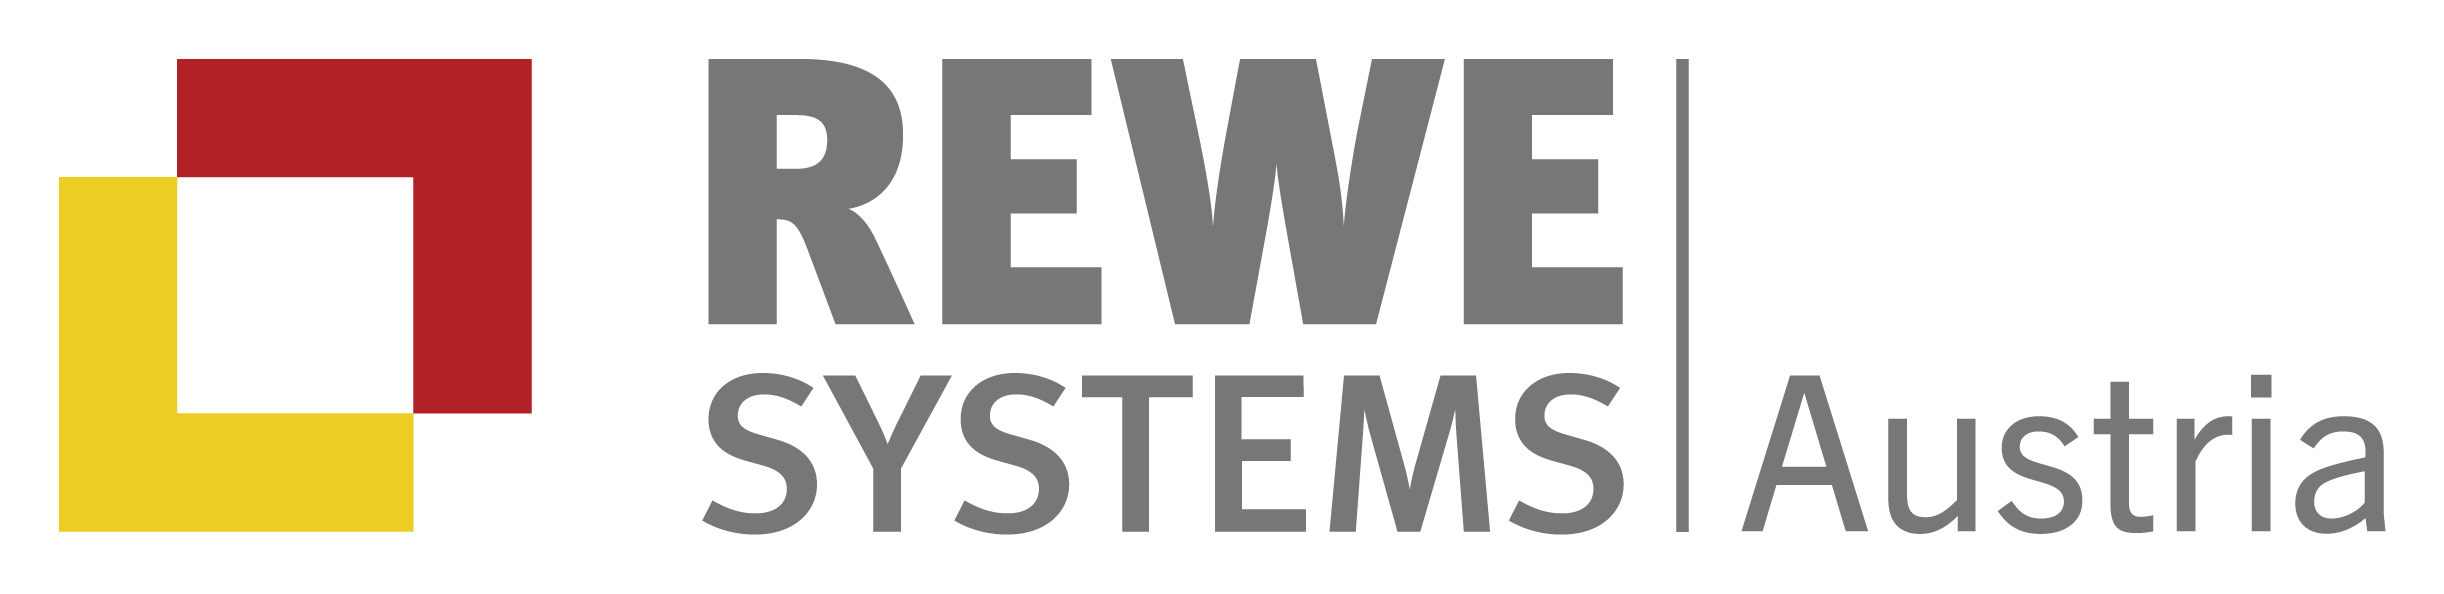 Logo REWE Systems Austria GmbH